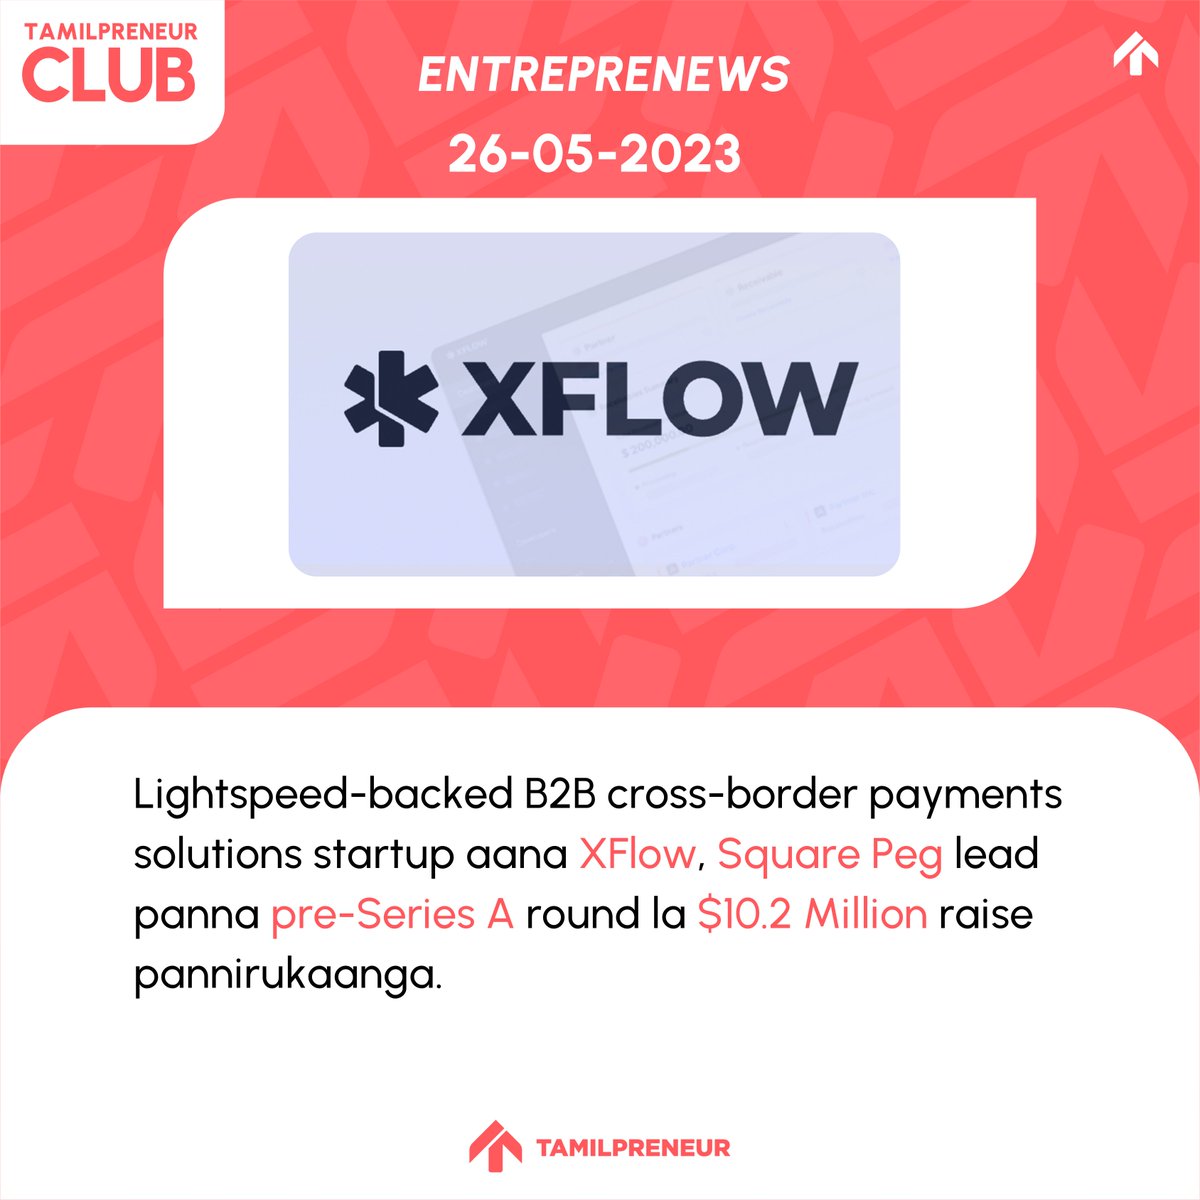 #Entreprenews - May 26

#Tamilpreneur #Tamilpreneurclub #Lightspeed #B2B #Crossborder #payments #XFlow #SquarePeg #preseriesA #funding #investment